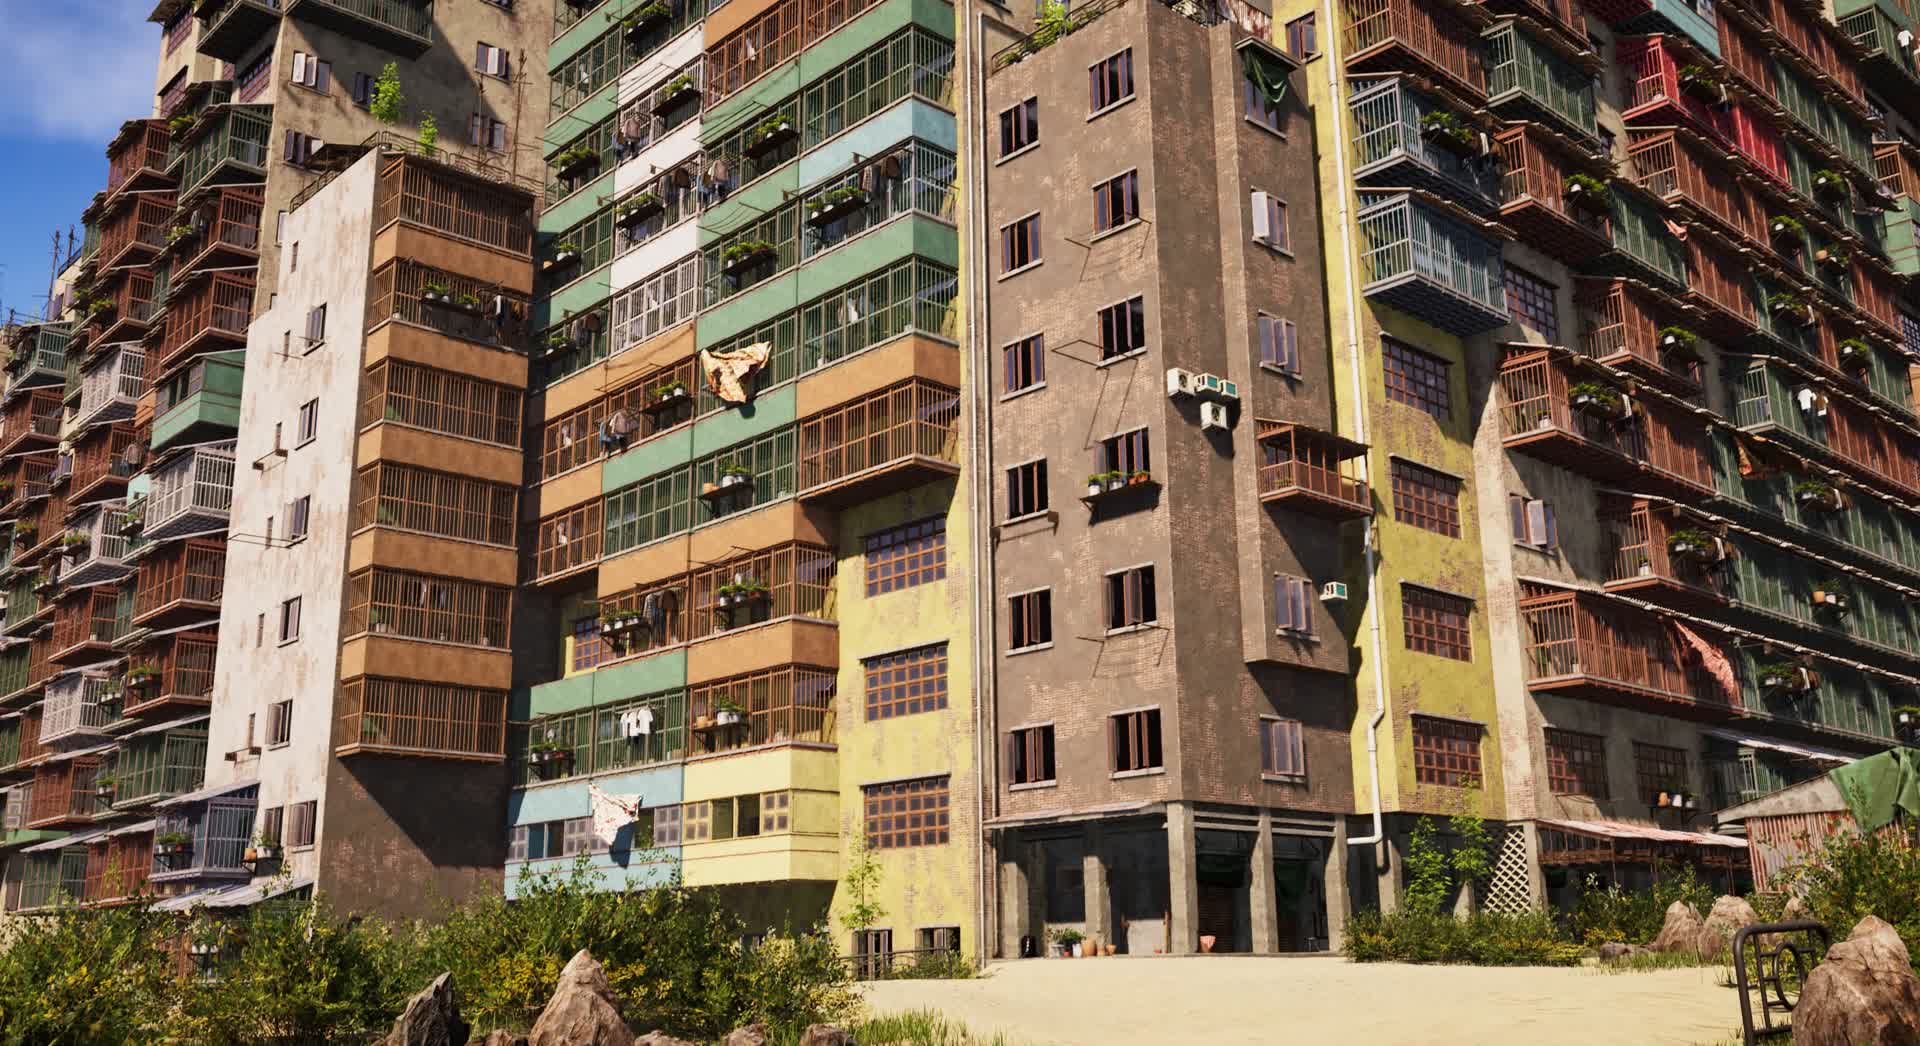 ArtStation - Kowloon walled City Miniature Part 2: Test prints & greeble  detailing